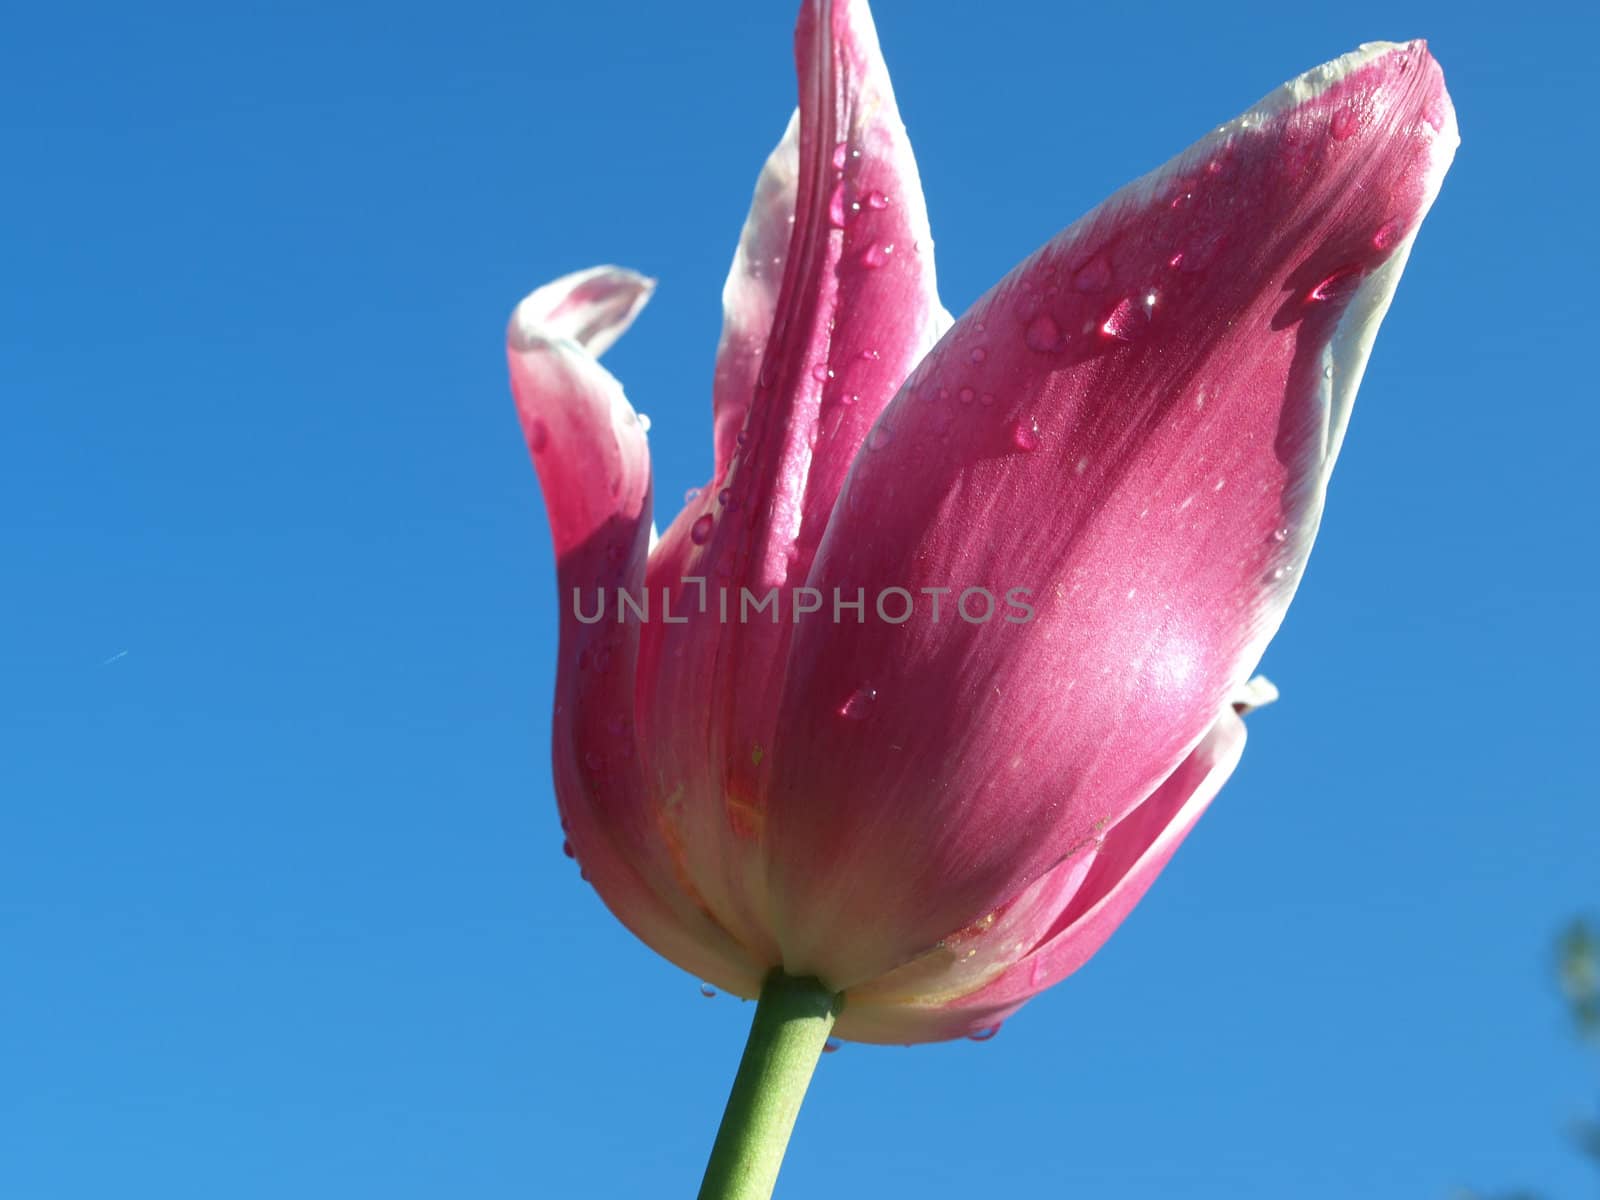 Wet tulip by northwoodsphoto